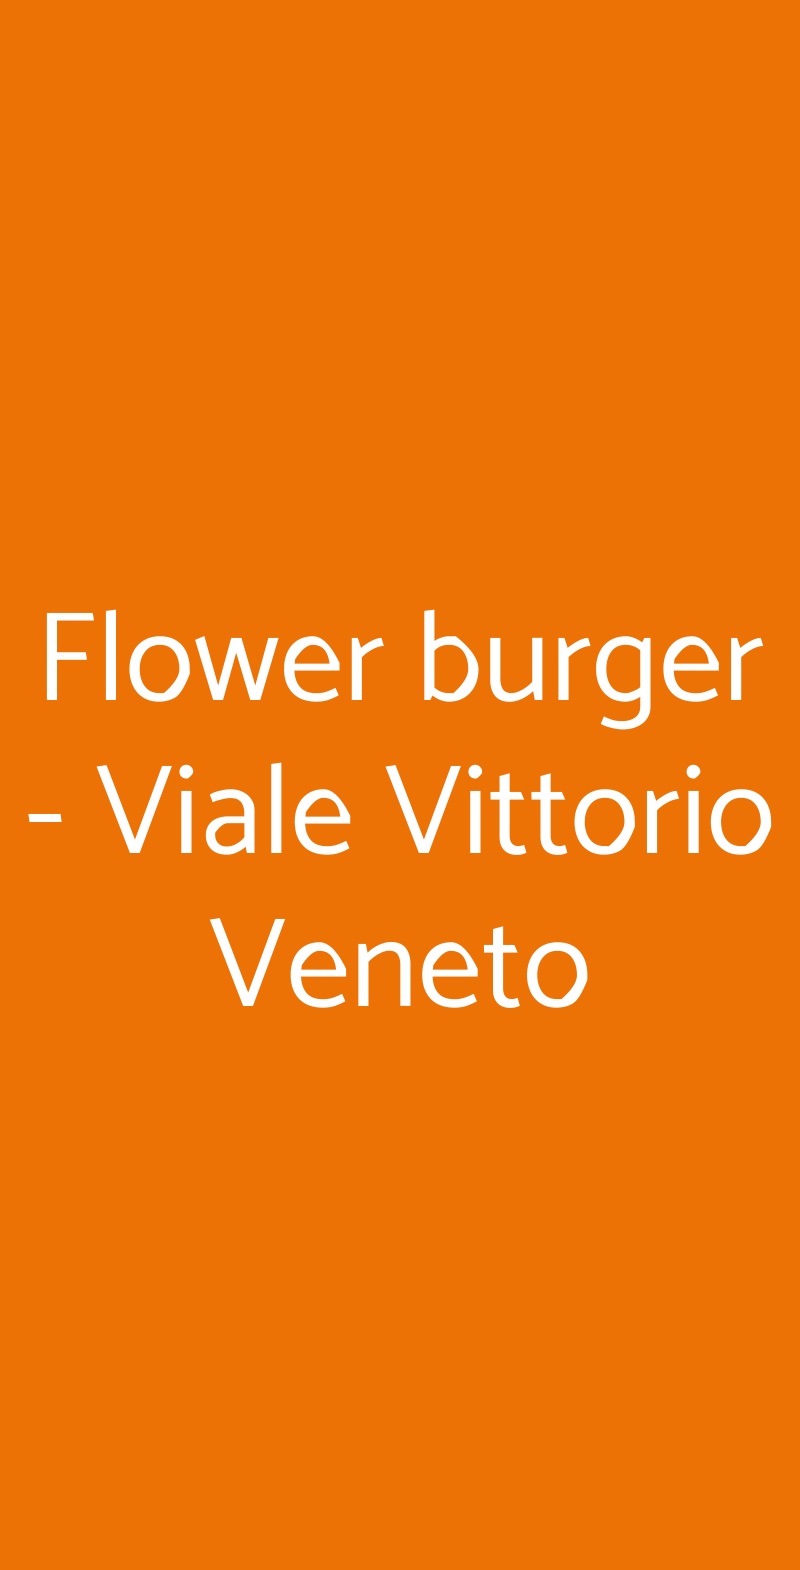 Flower burger - Viale Vittorio Veneto Milano menù 1 pagina